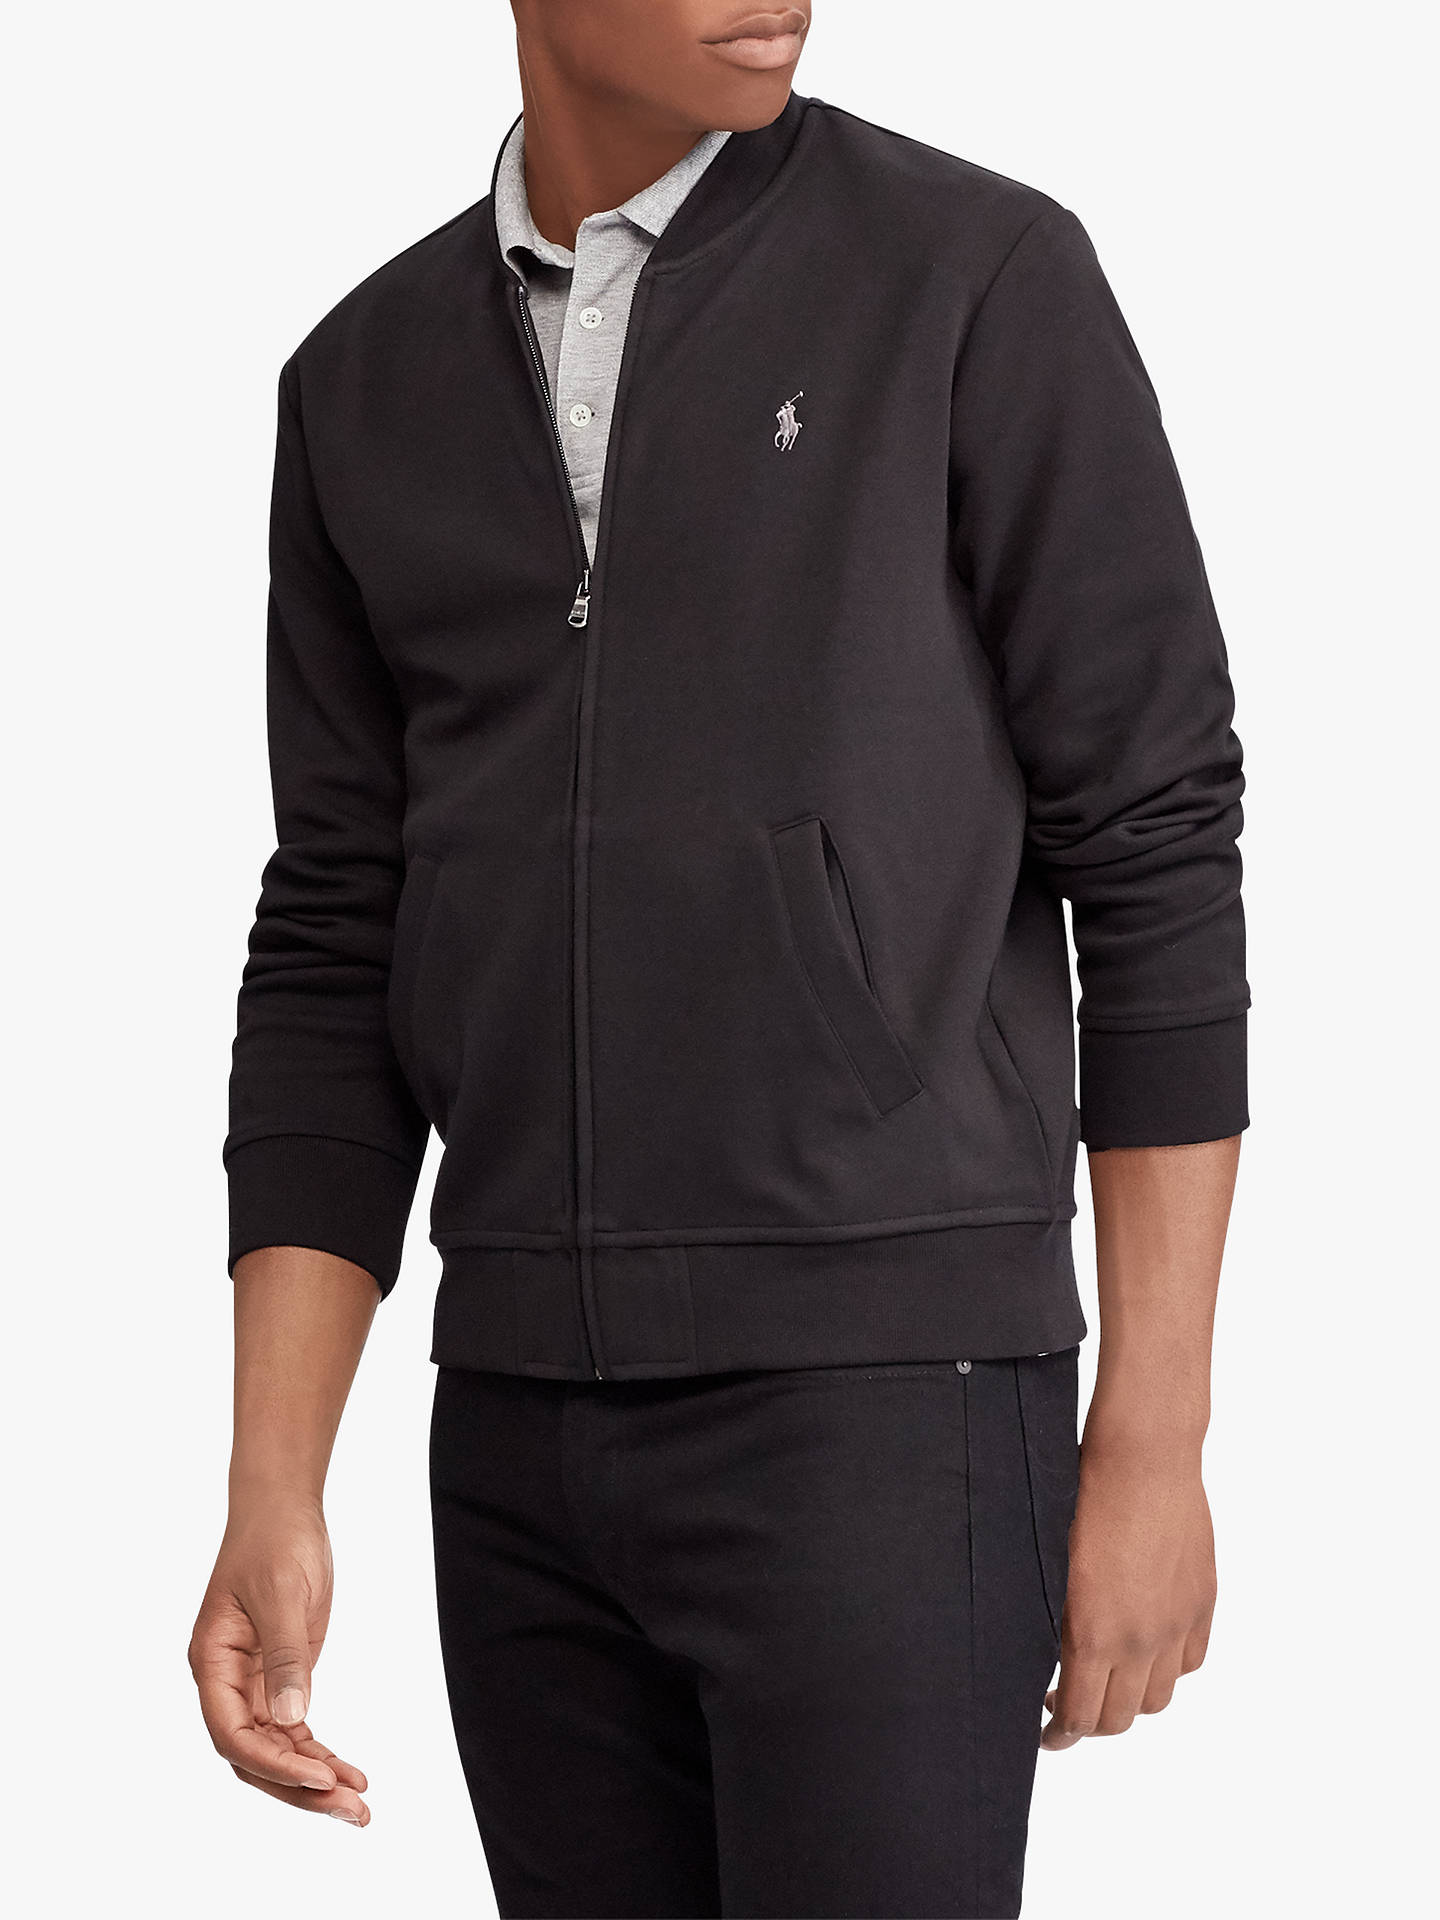 Polo Ralph Lauren Double-Knit Bomber Jacket, Black at John Lewis & Partners